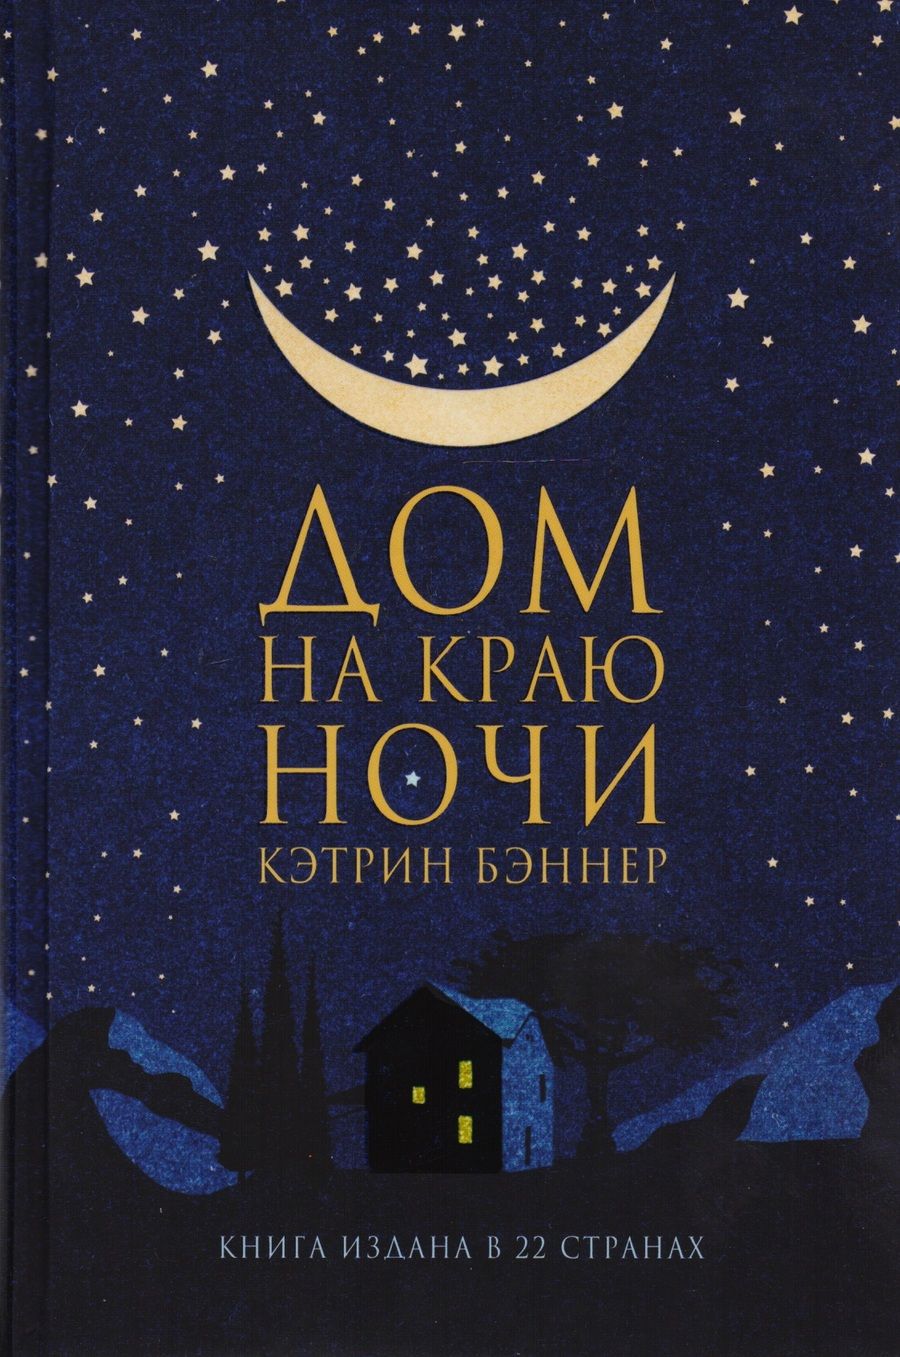 Обложка книги "Бэннер: Дом на краю ночи"